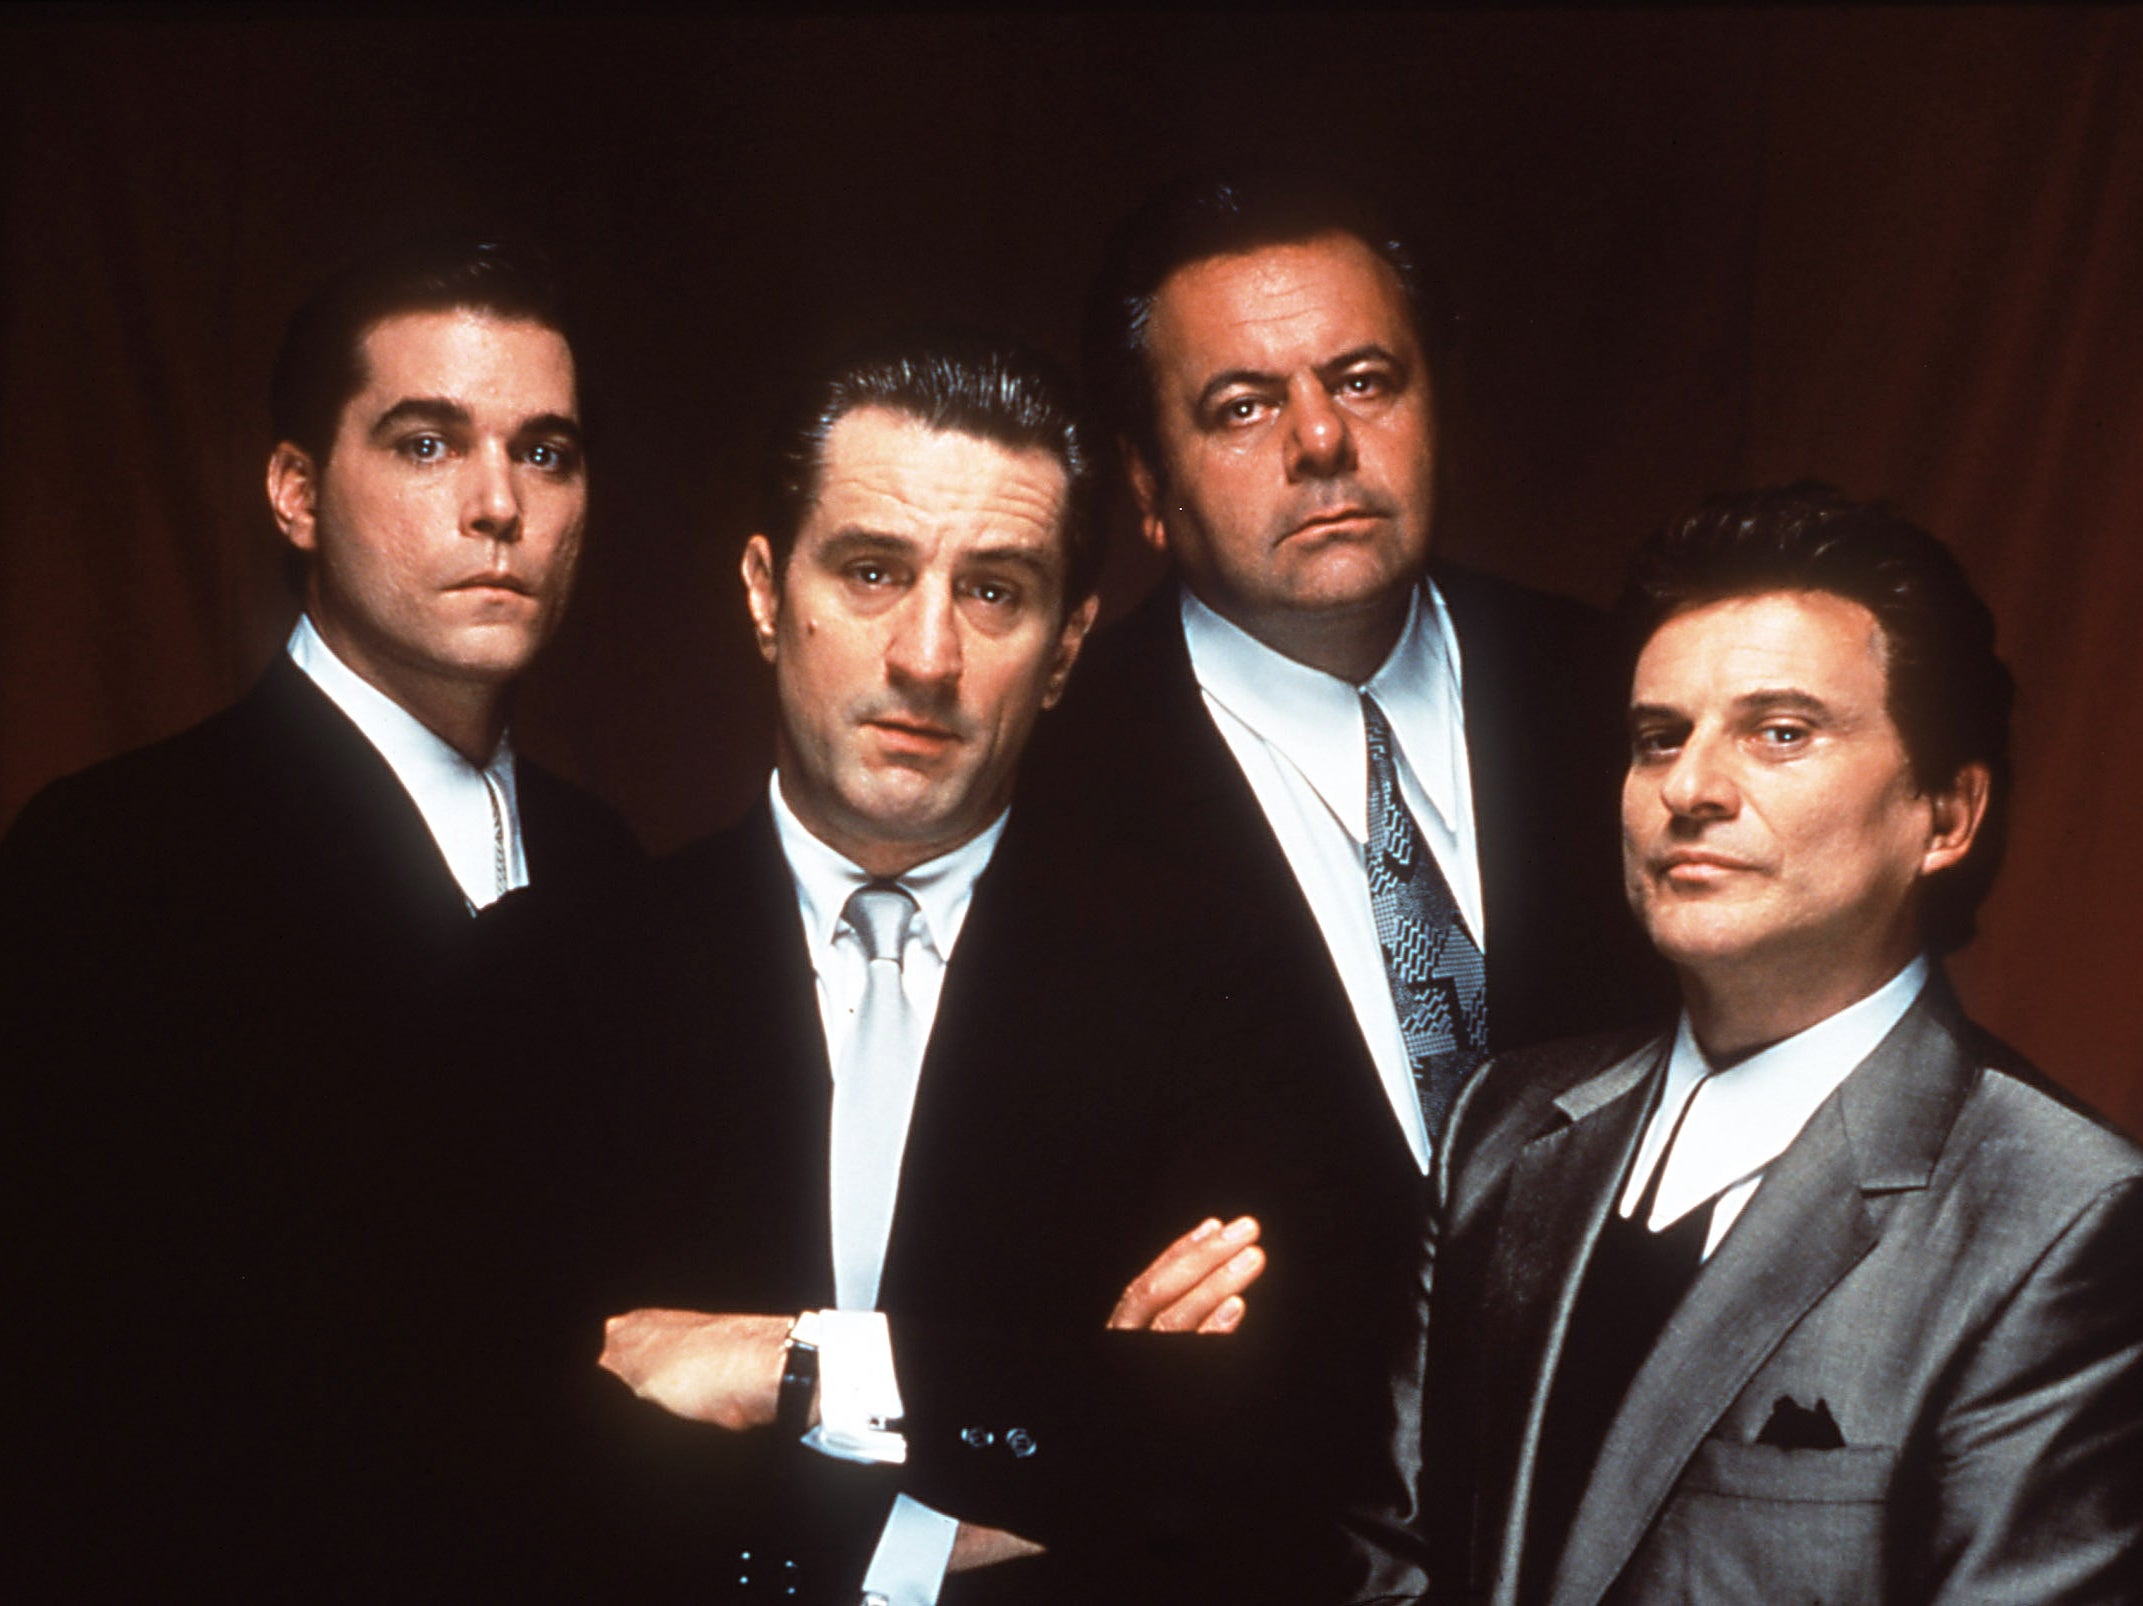 From left to right: Ray Liotta, Robert De Niro, Paul Sorvino and Joe Pesci in 'Goodfellas'